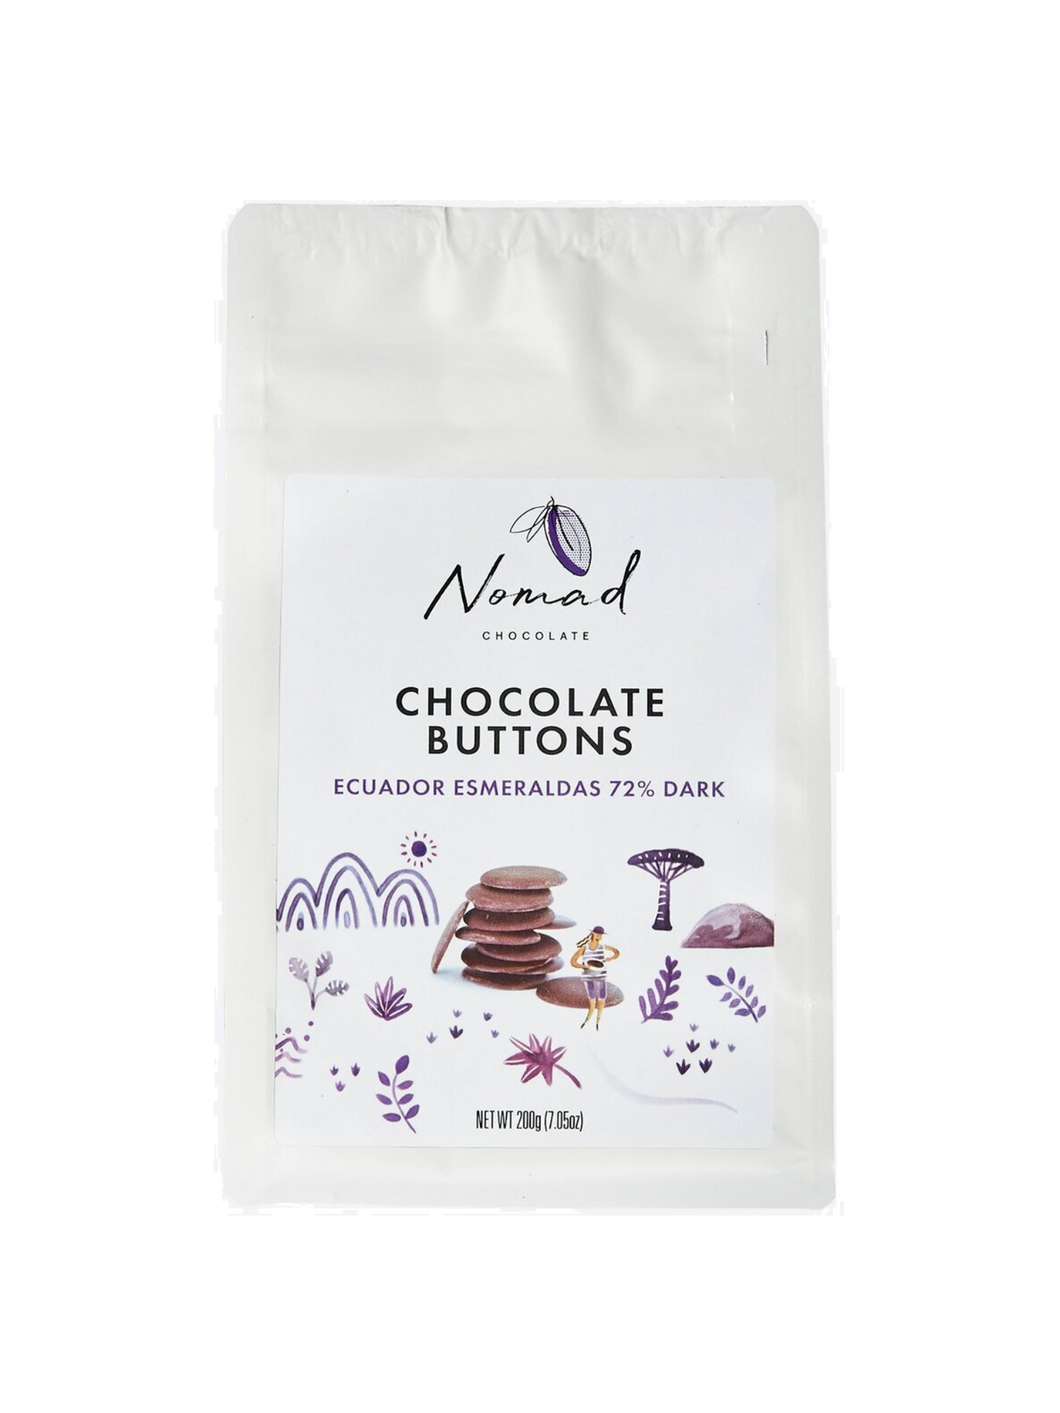 Nomad Chocolate Vegan, dairy and gluten free 72% dark chocolate buttons baking chocolate